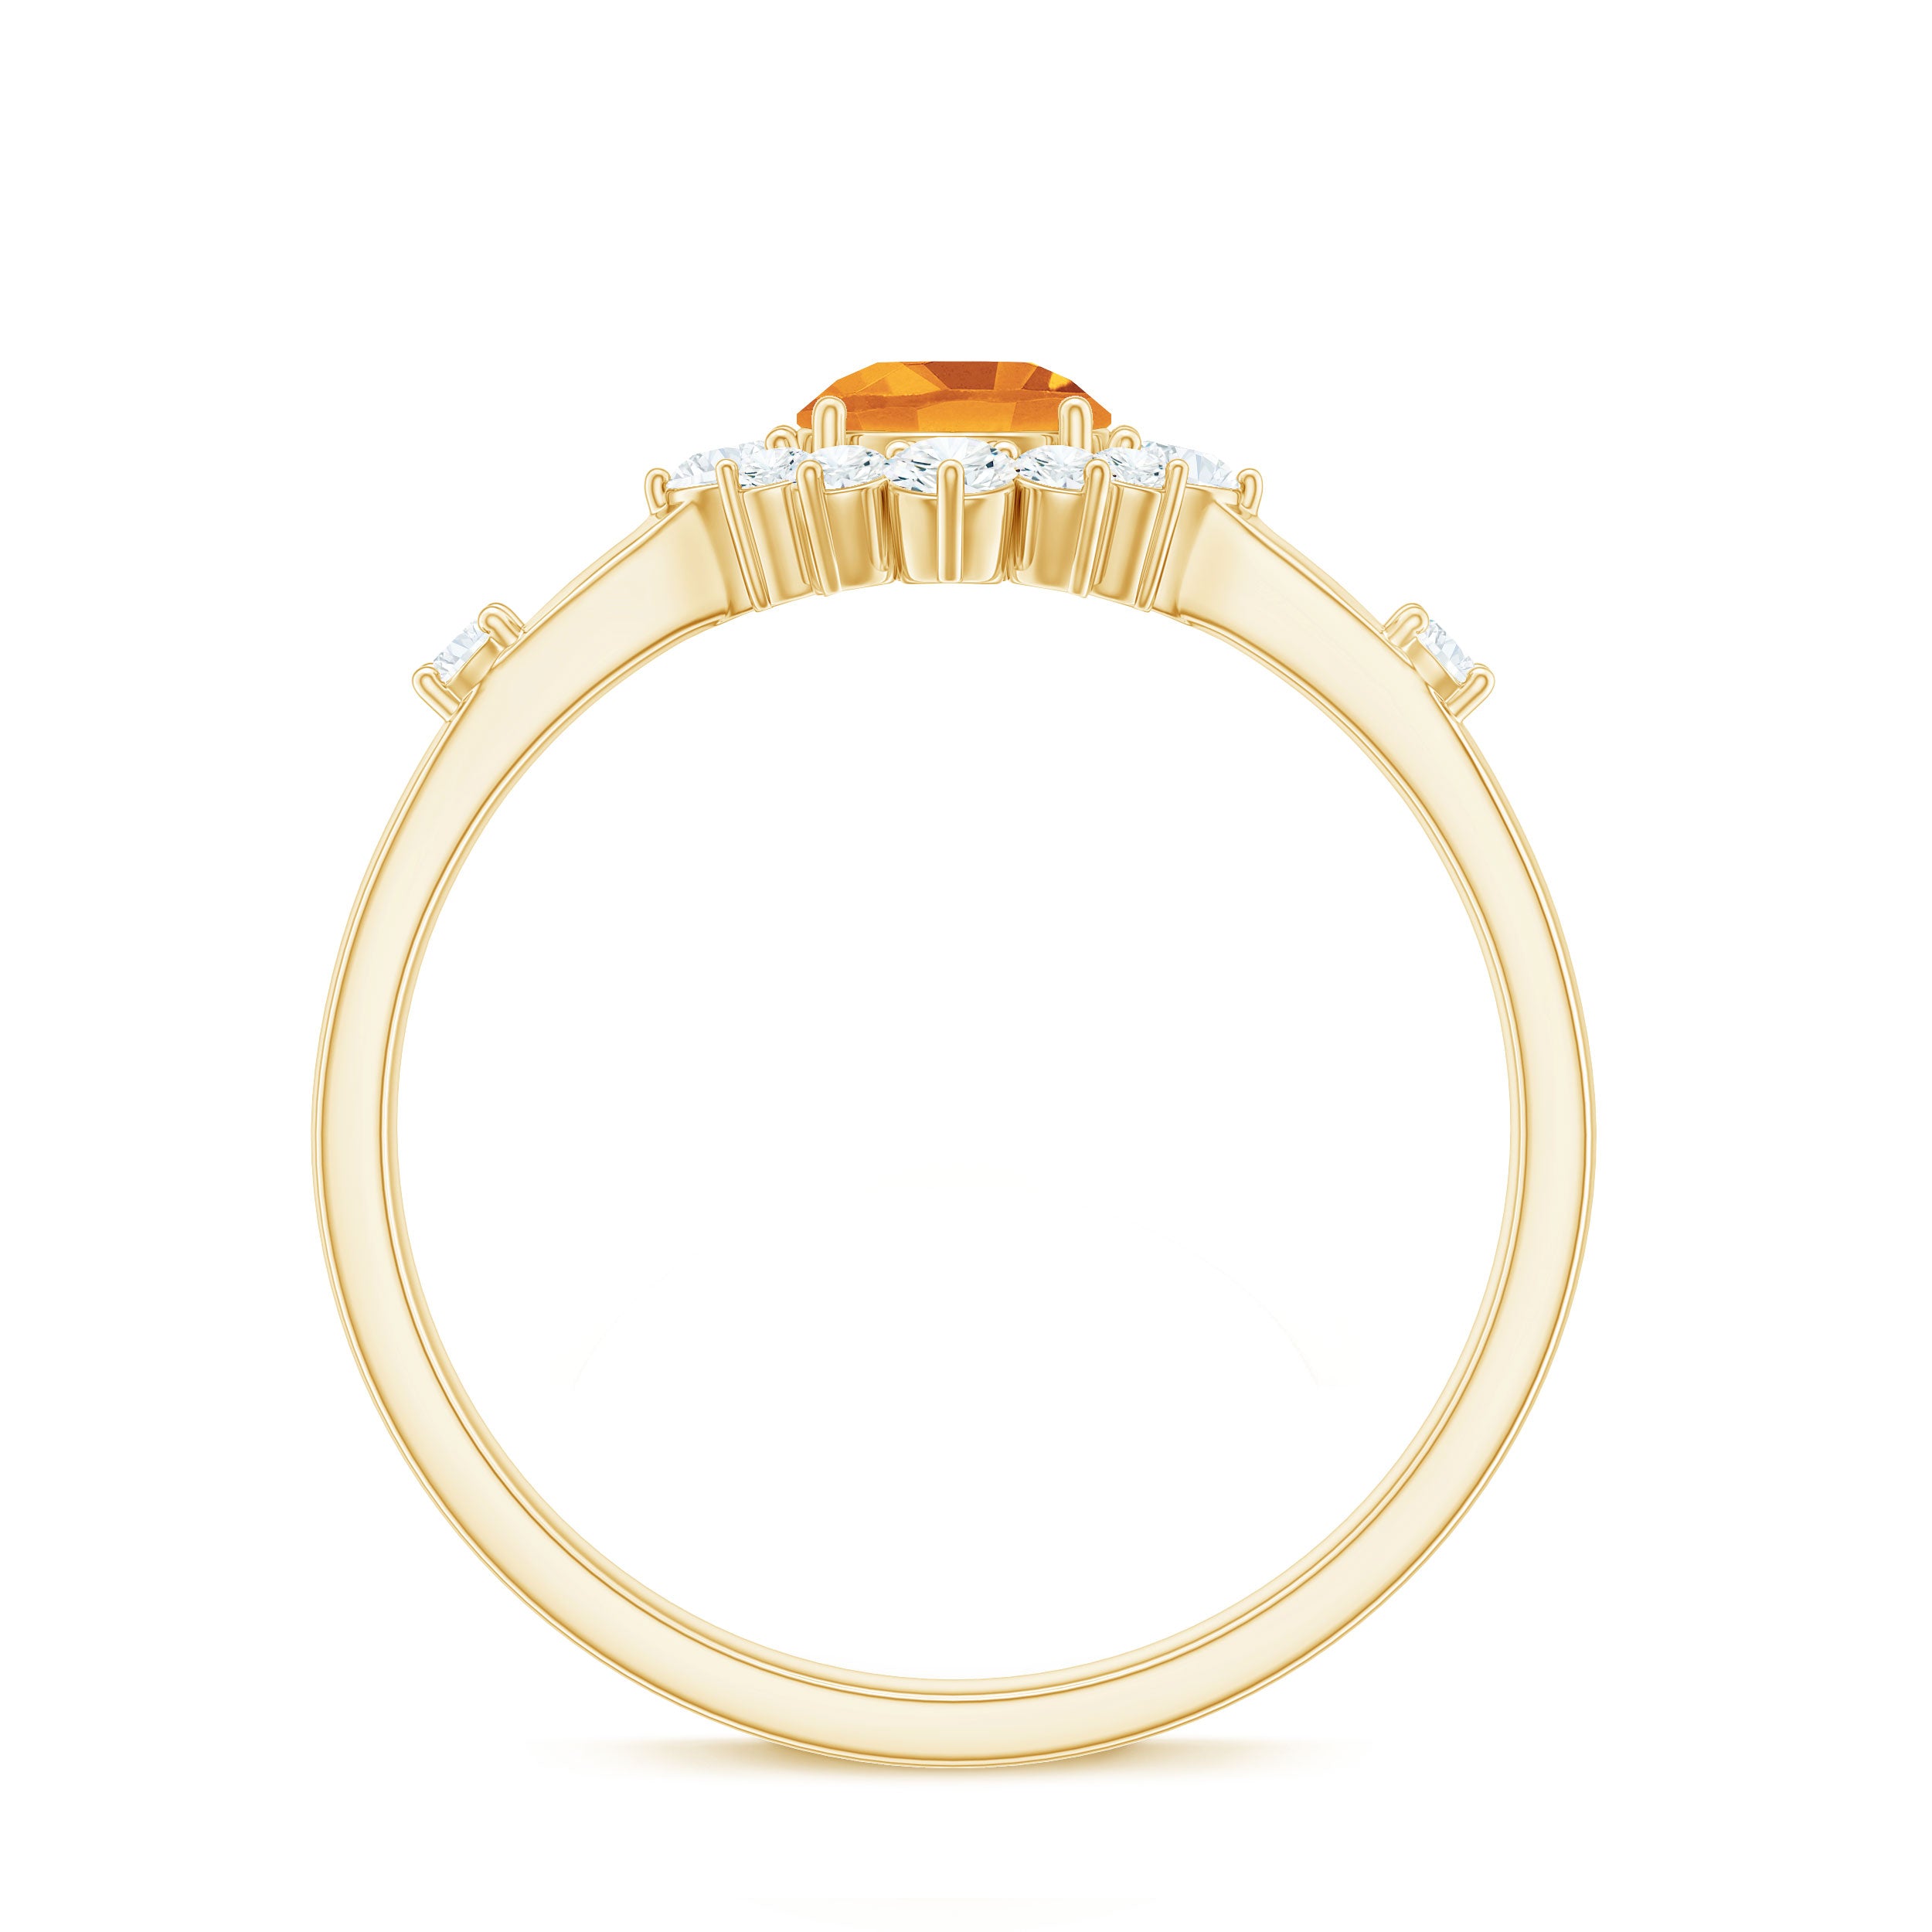 Rosec Jewels-1 CT Round Citrine and Diamond Halo Engagement Ring